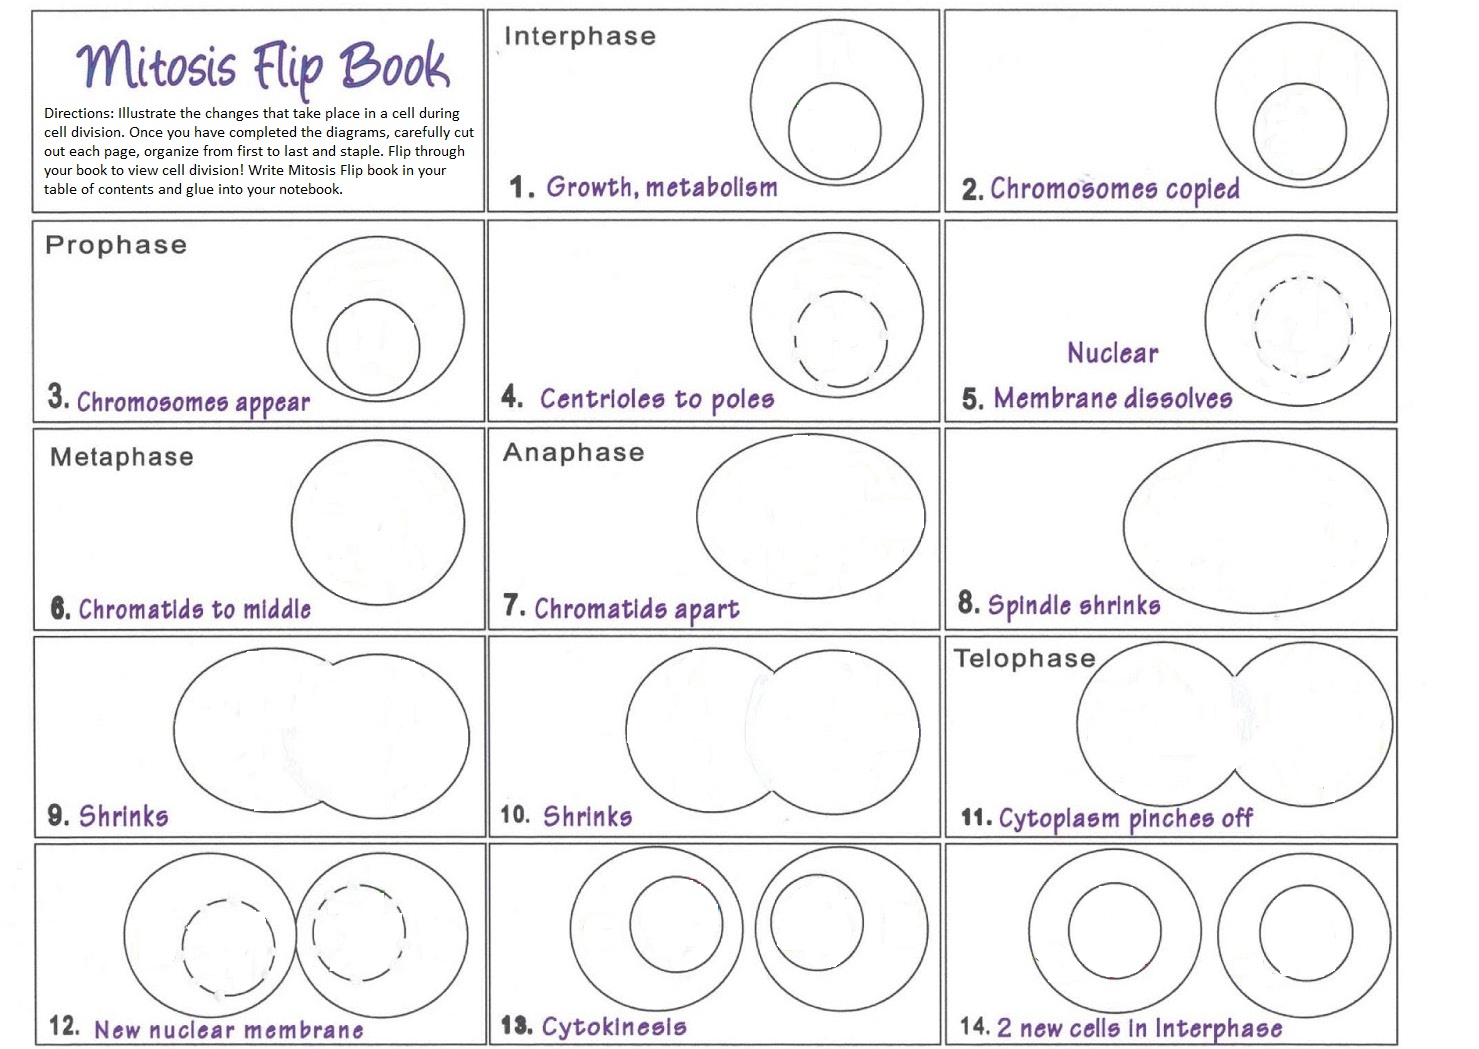 mitosis flip book mitosis